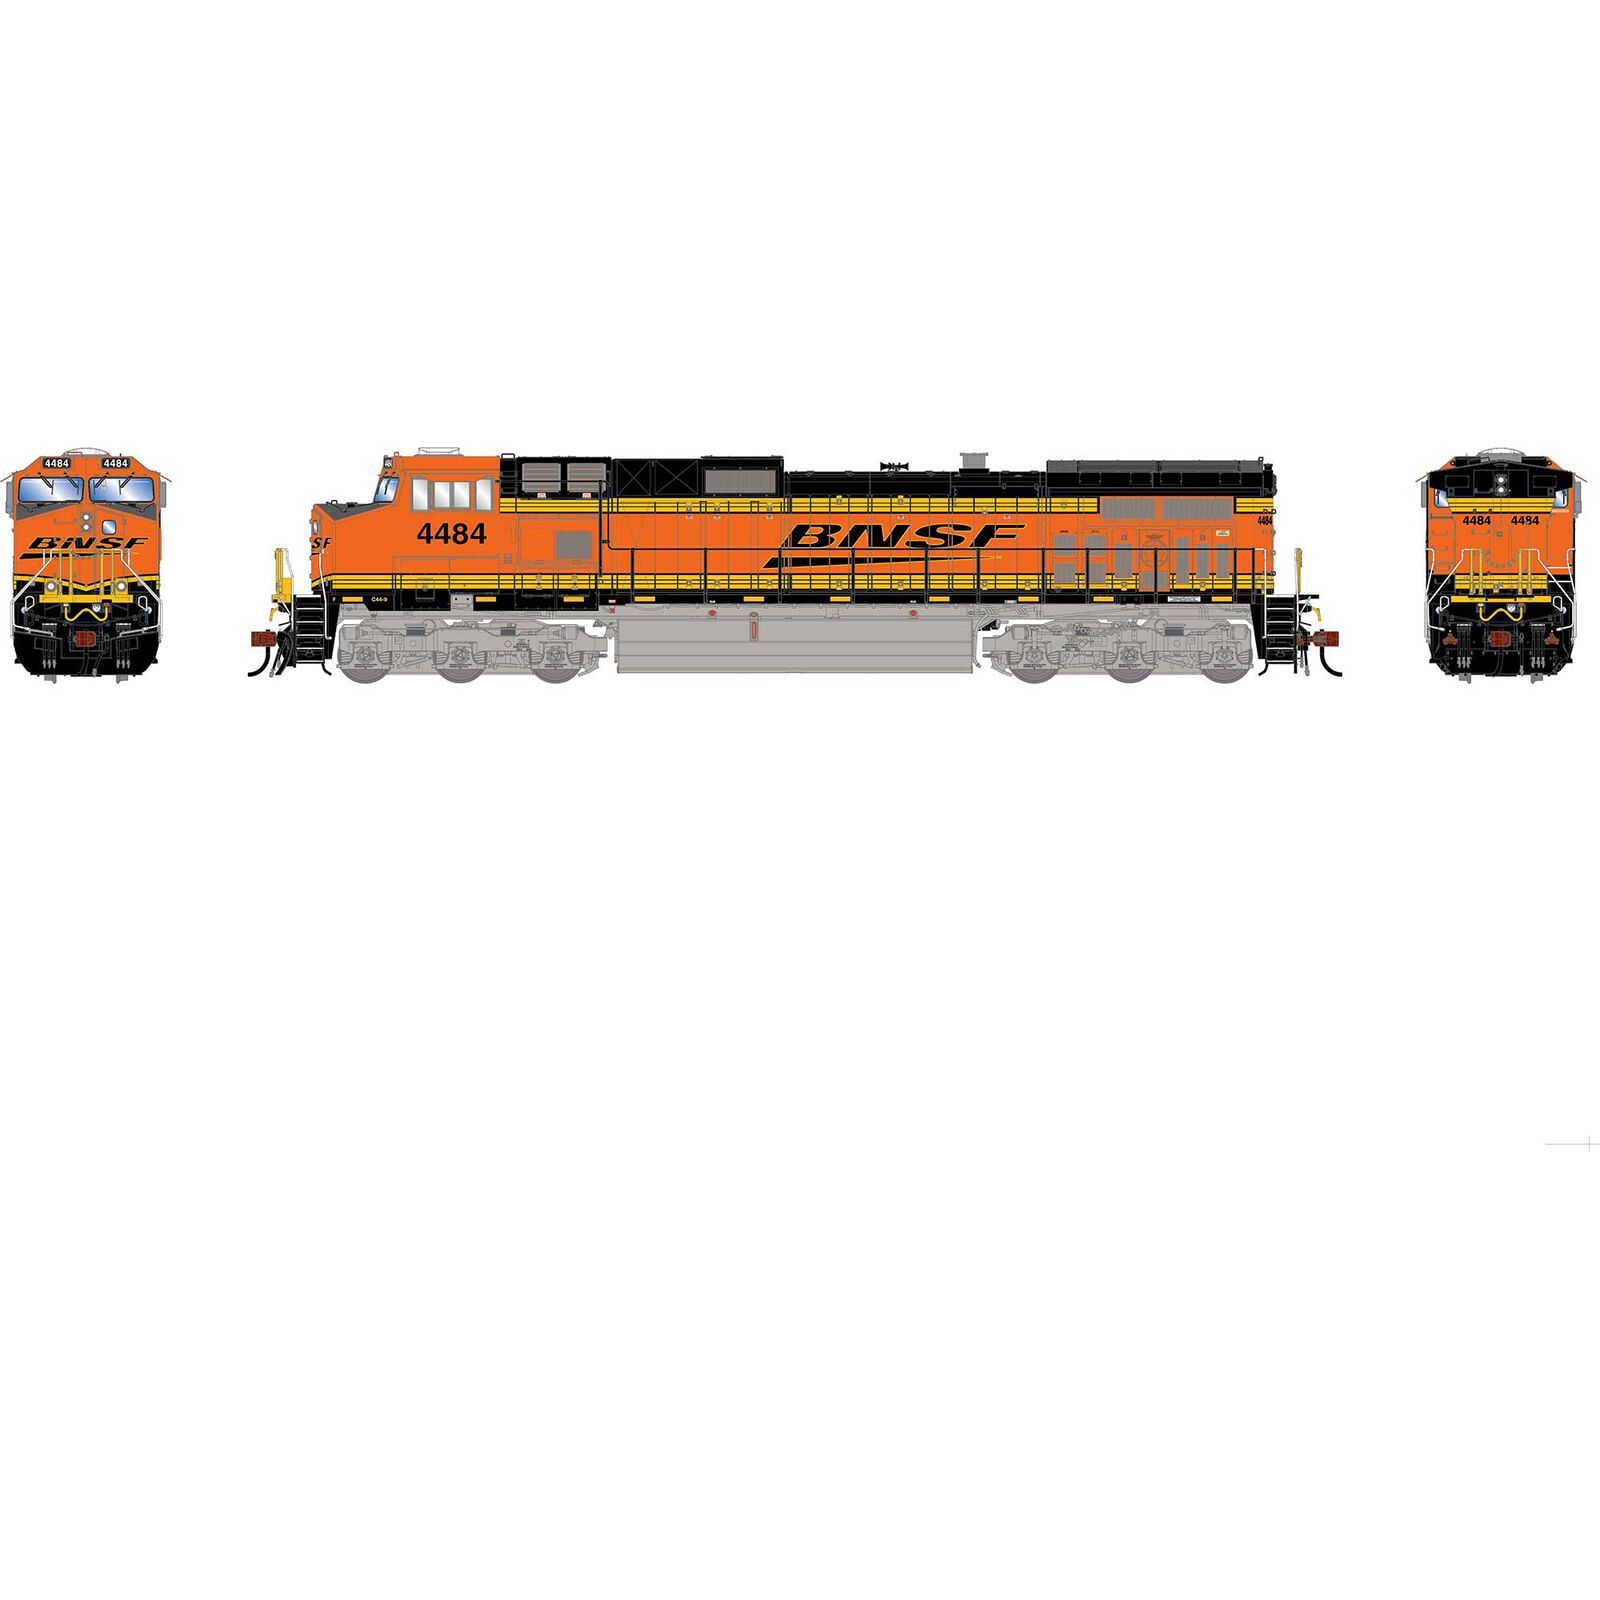 HO GE Dash 9-44CW Locomotive with DCC & Sound, BNSF Wedge #4484